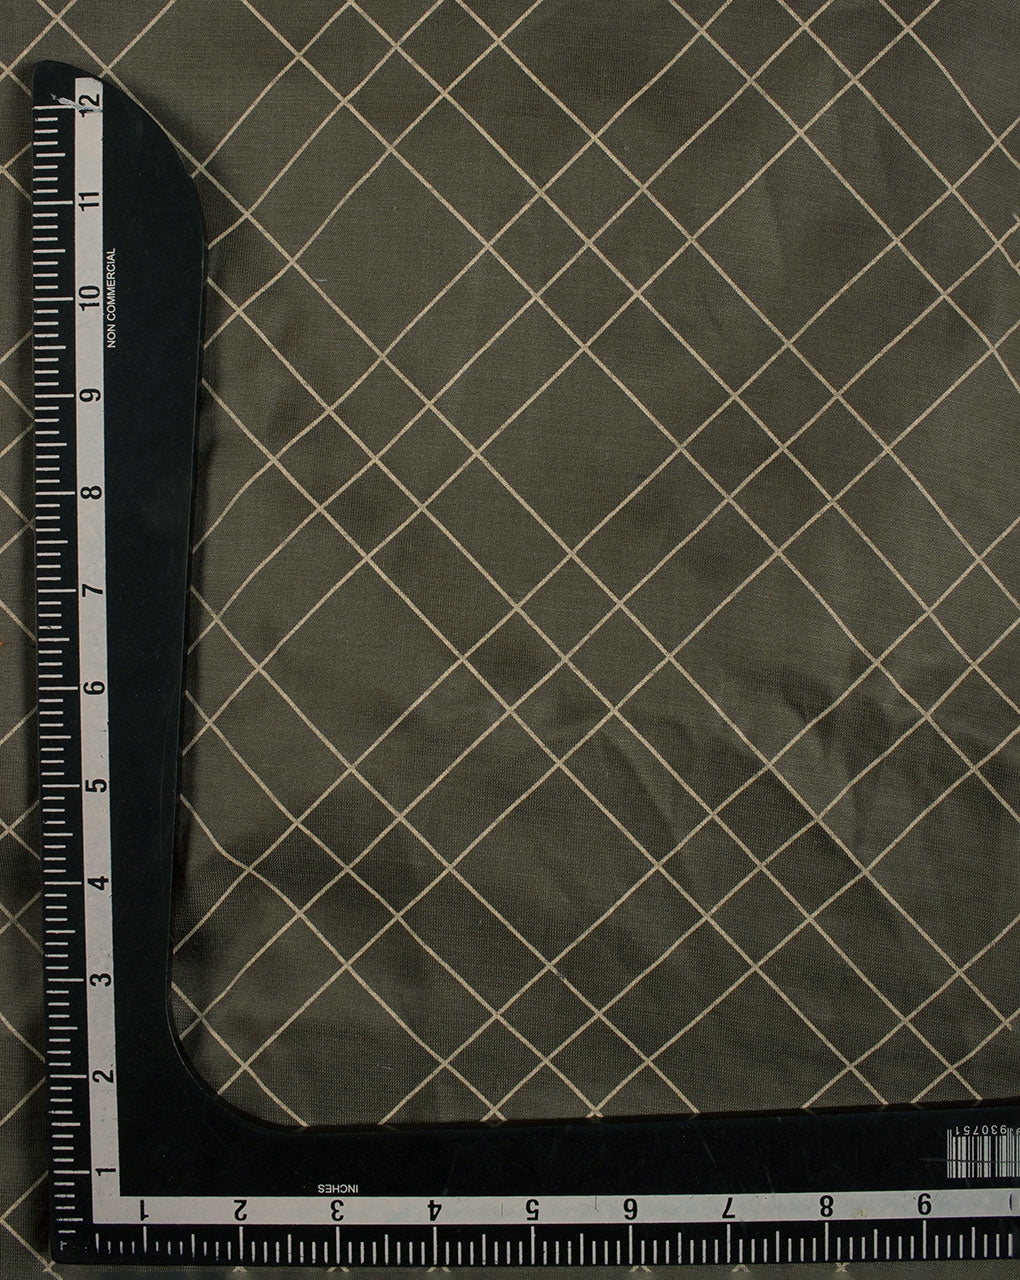 Khari Screen Print Polyester Fabric - Fabriclore.com